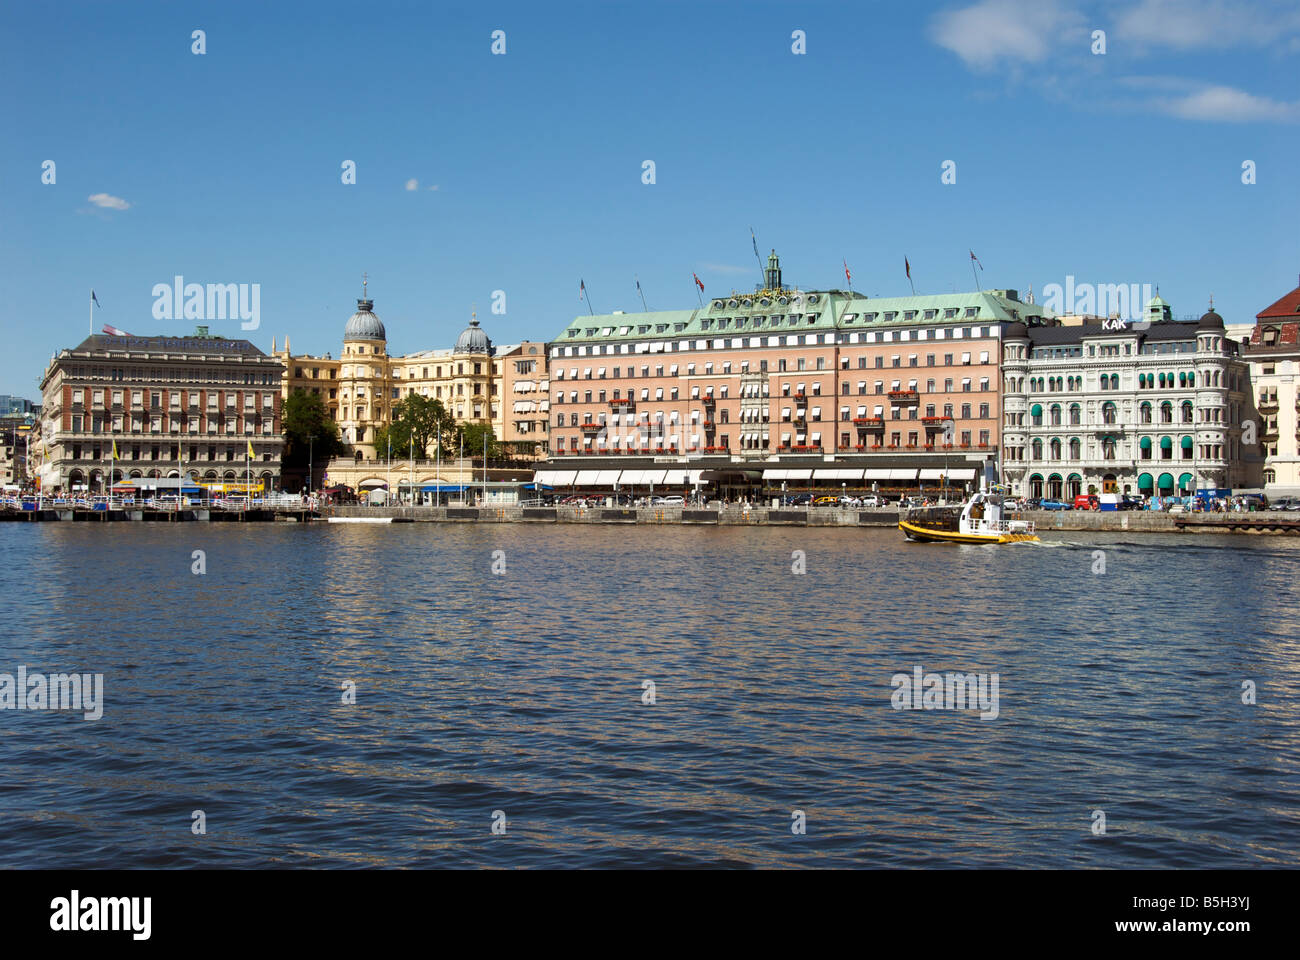 Panoramablick auf Stromkajen mit Grand Hotel Strommen Bay Stockholm Schweden Stockfoto